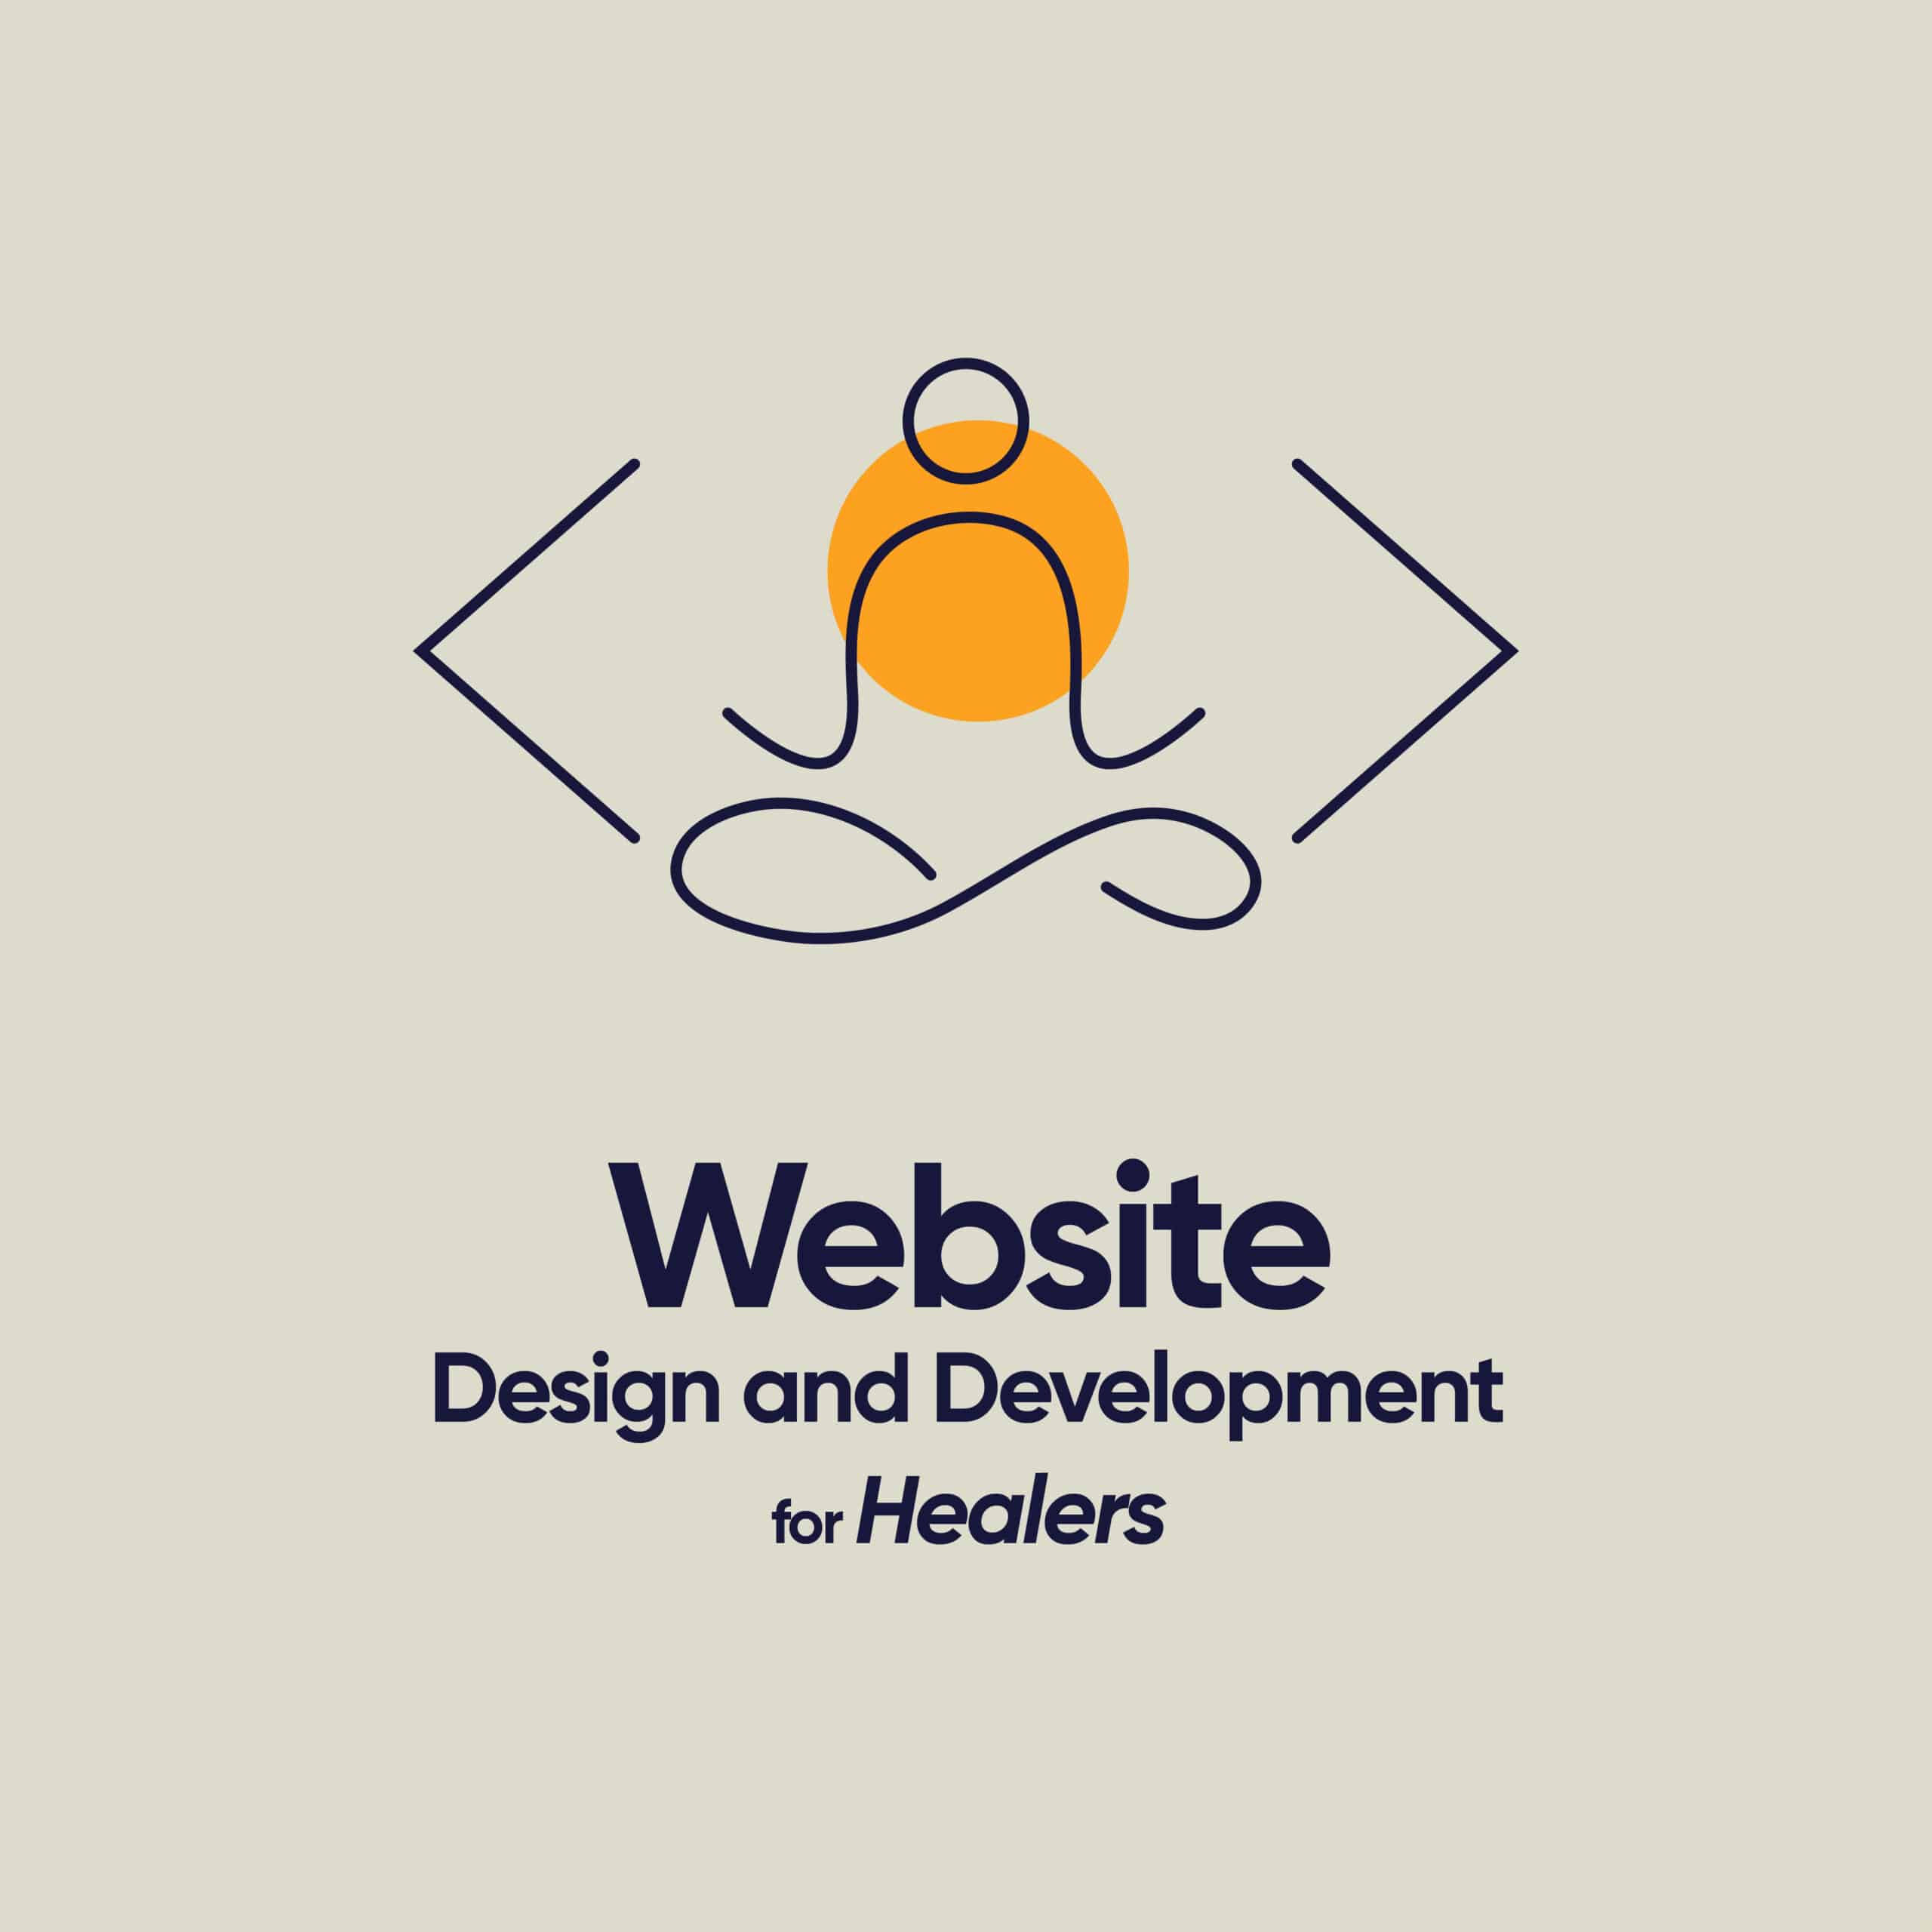 Website Design and Development for Healers